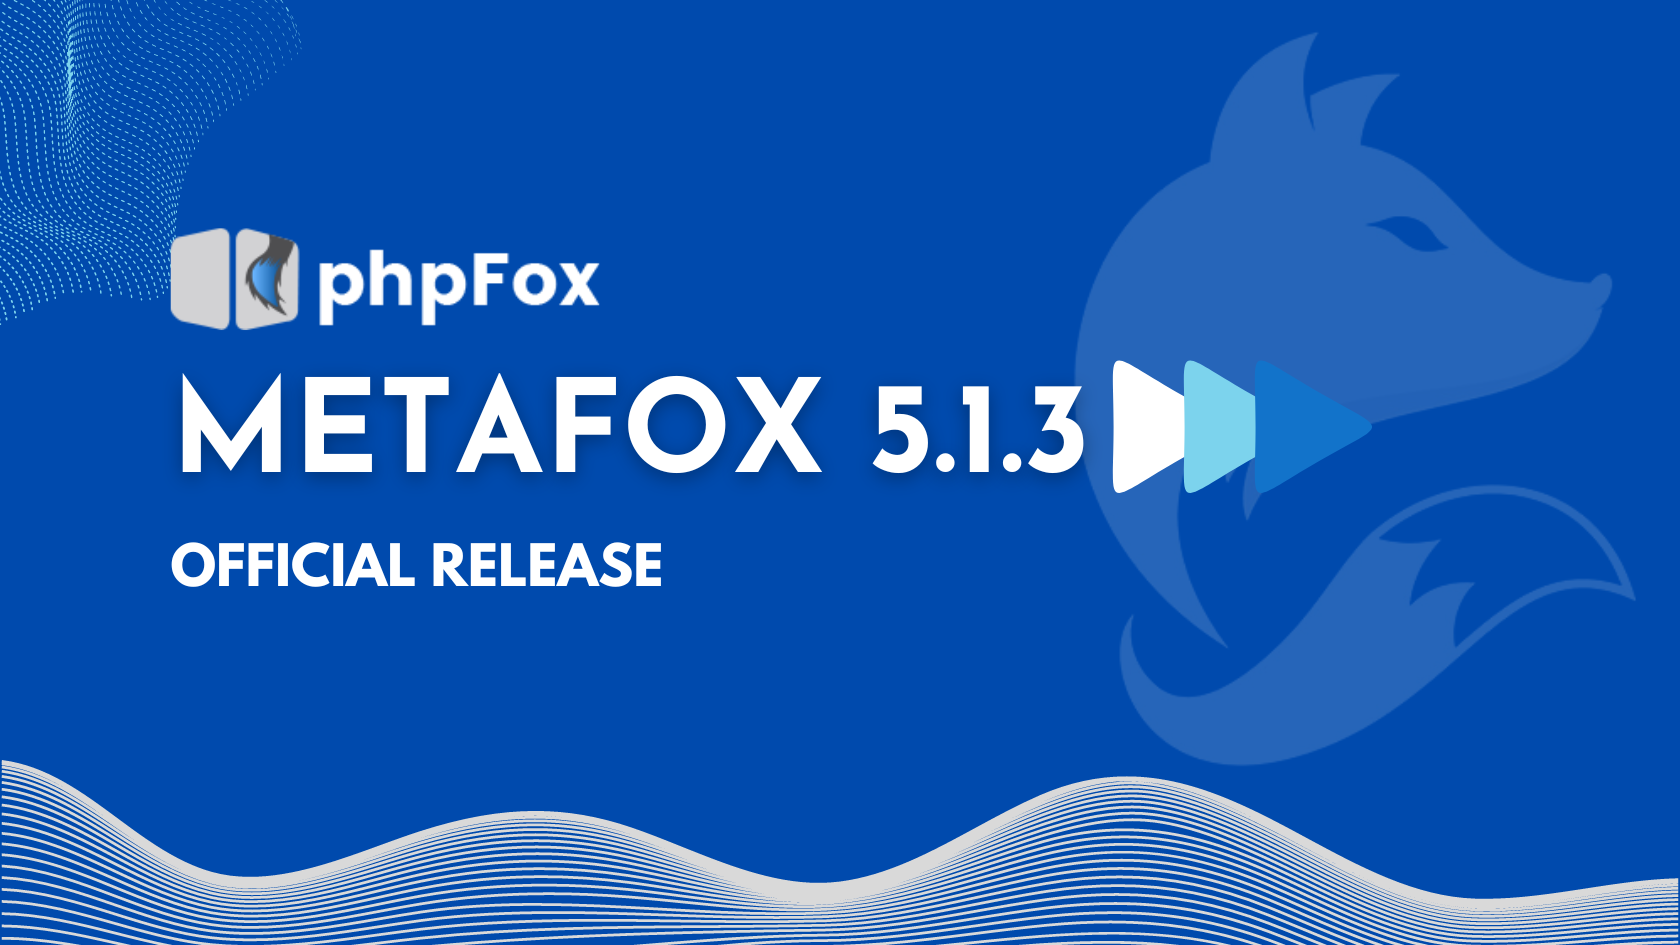 MetaFox 5.1.3 Official Release